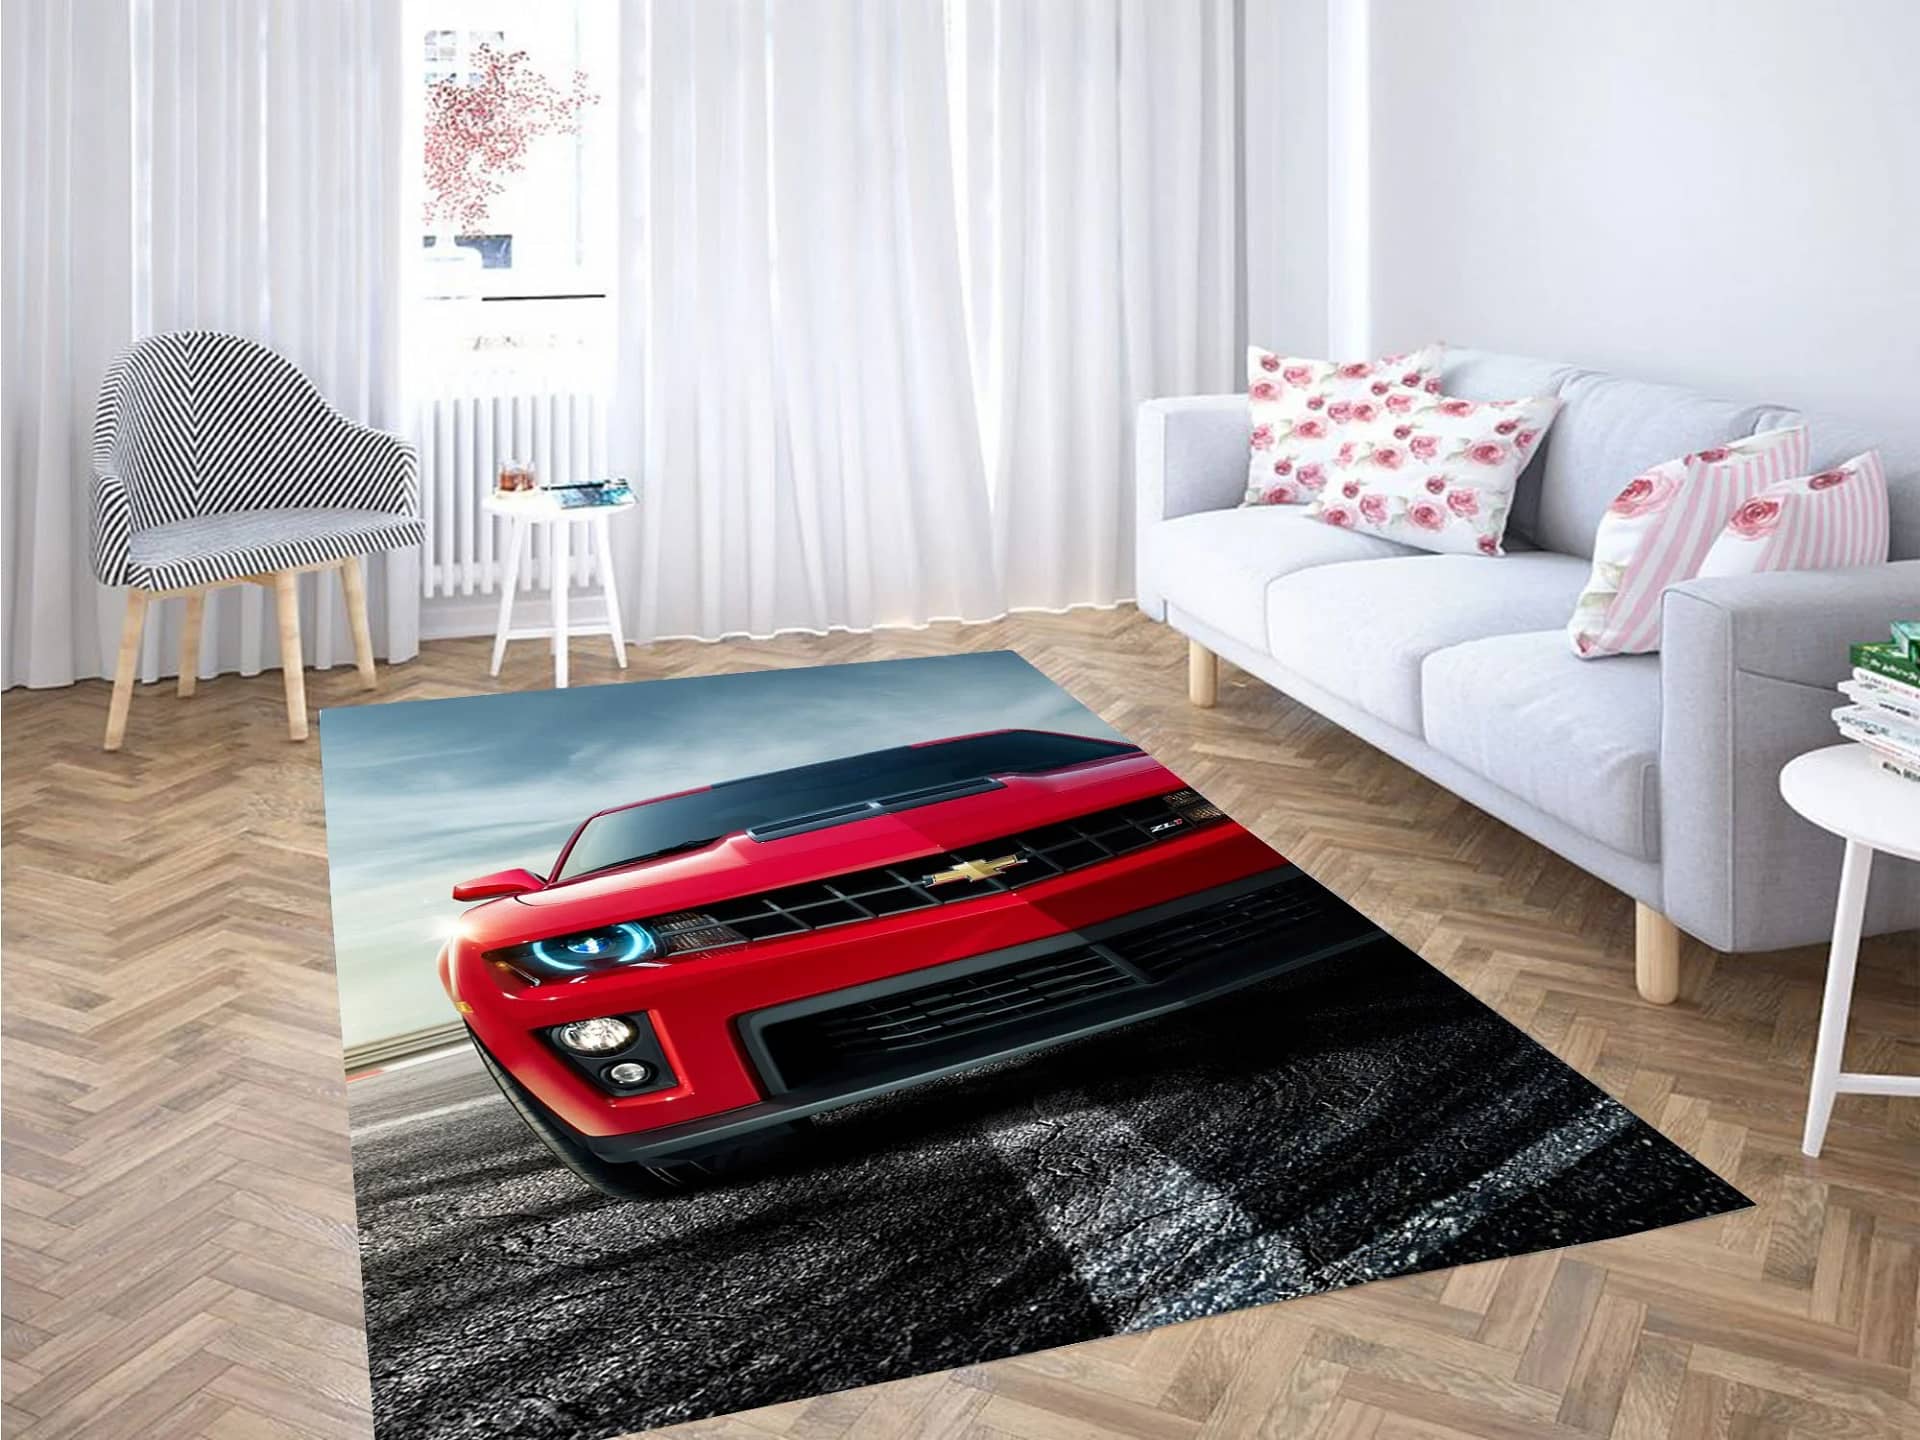 Chevrolet Red Car Carpet Rug